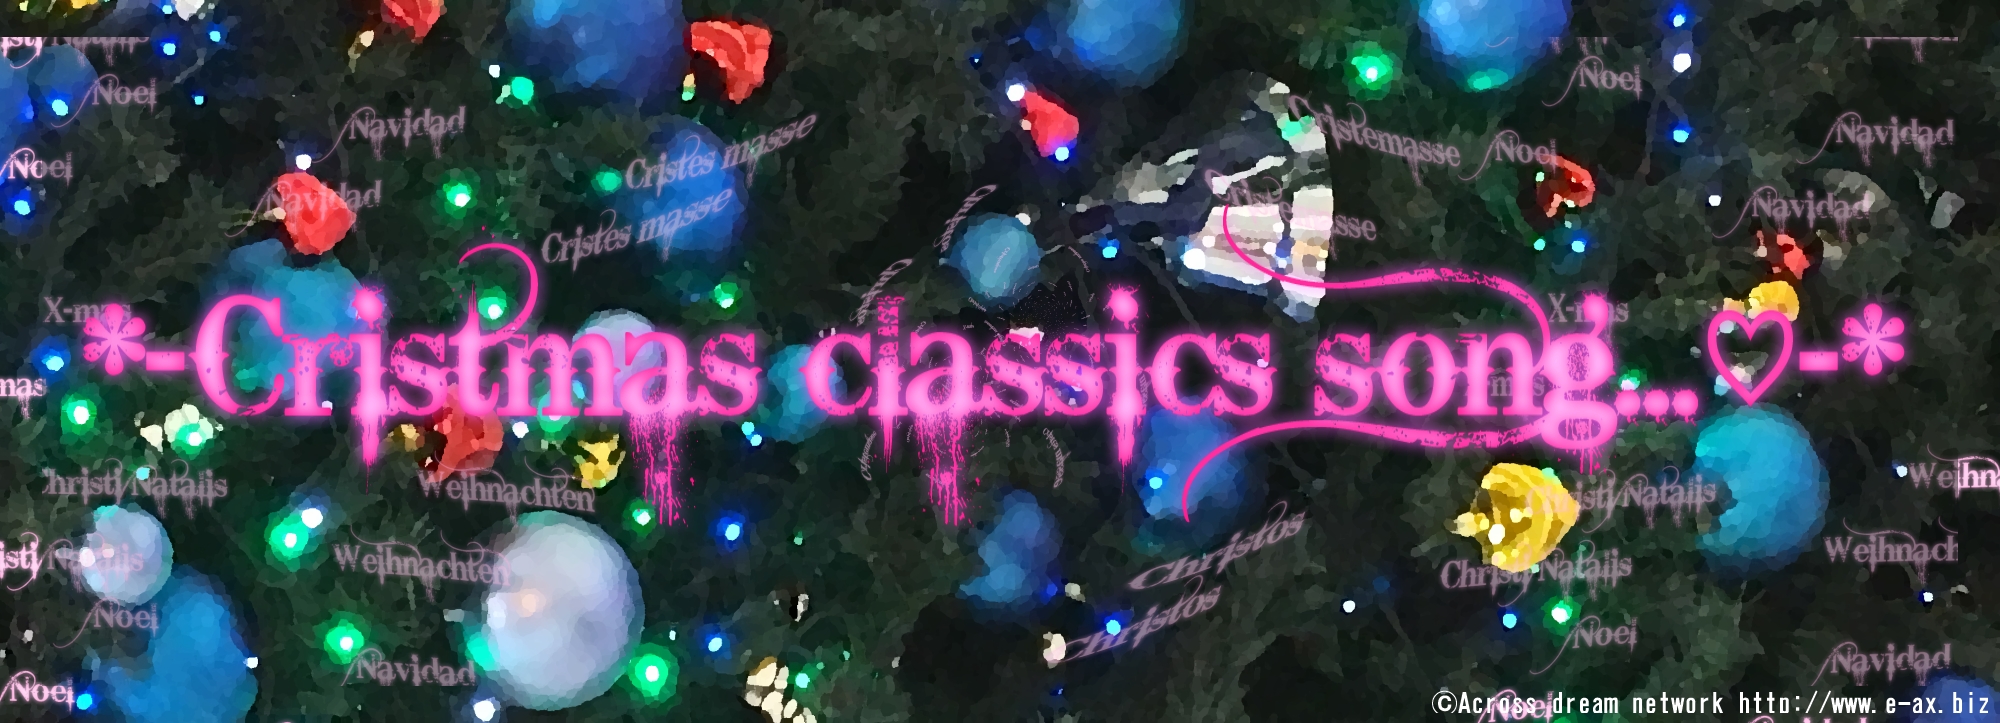 cristmasxlassics-song